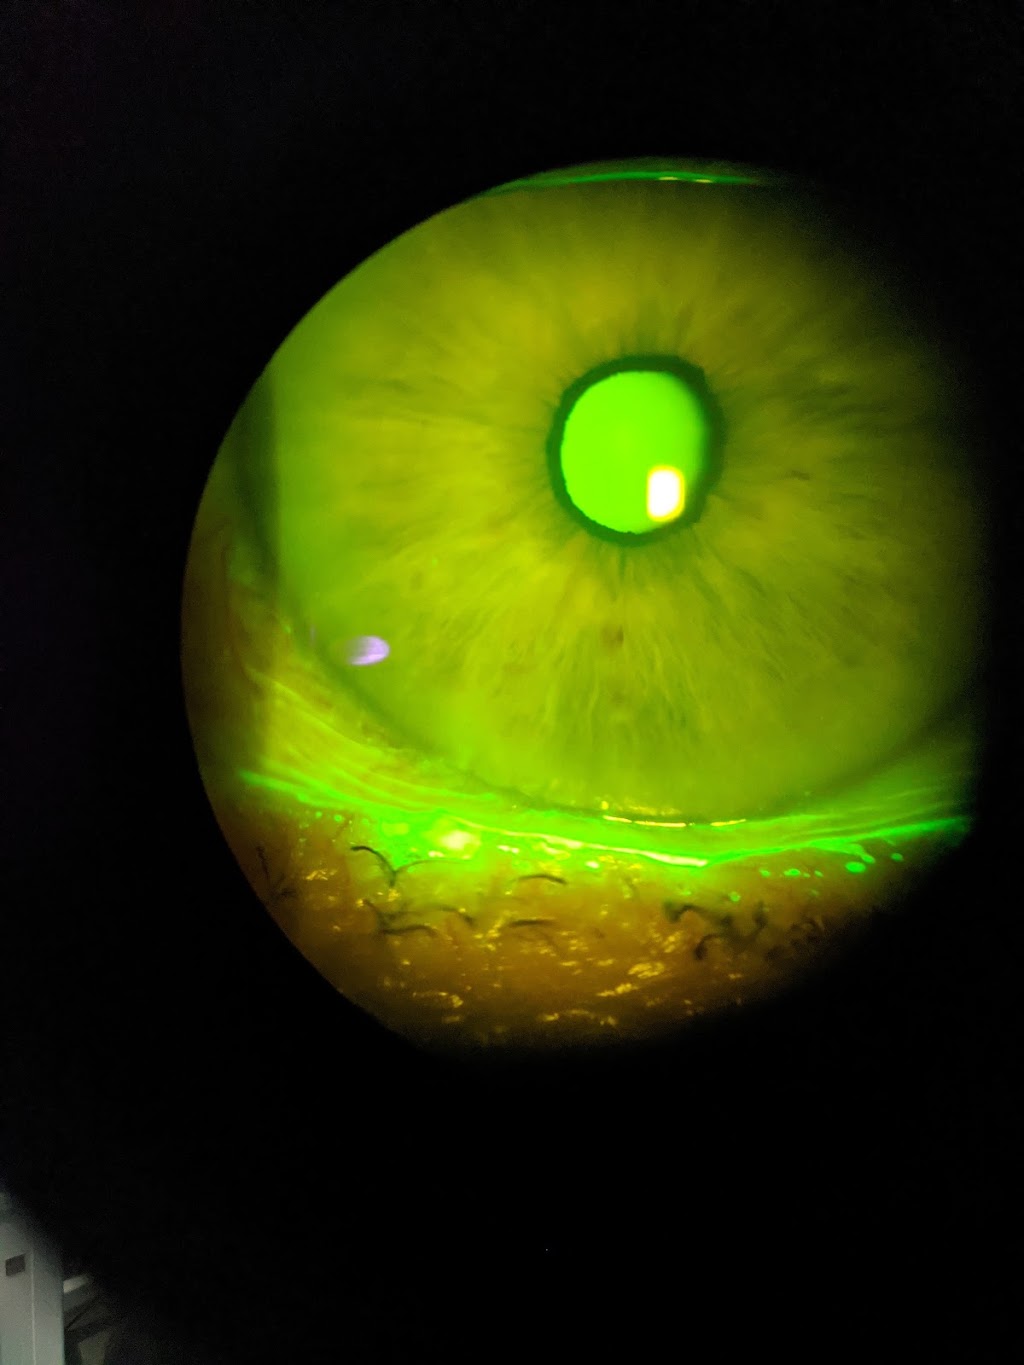 Prism Dry Eye Clinic (formerly eyeLABS Optometry) | 7700 Hurontario St #605, Brampton, ON L6Y 4M3, Canada | Phone: (905) 456-3937